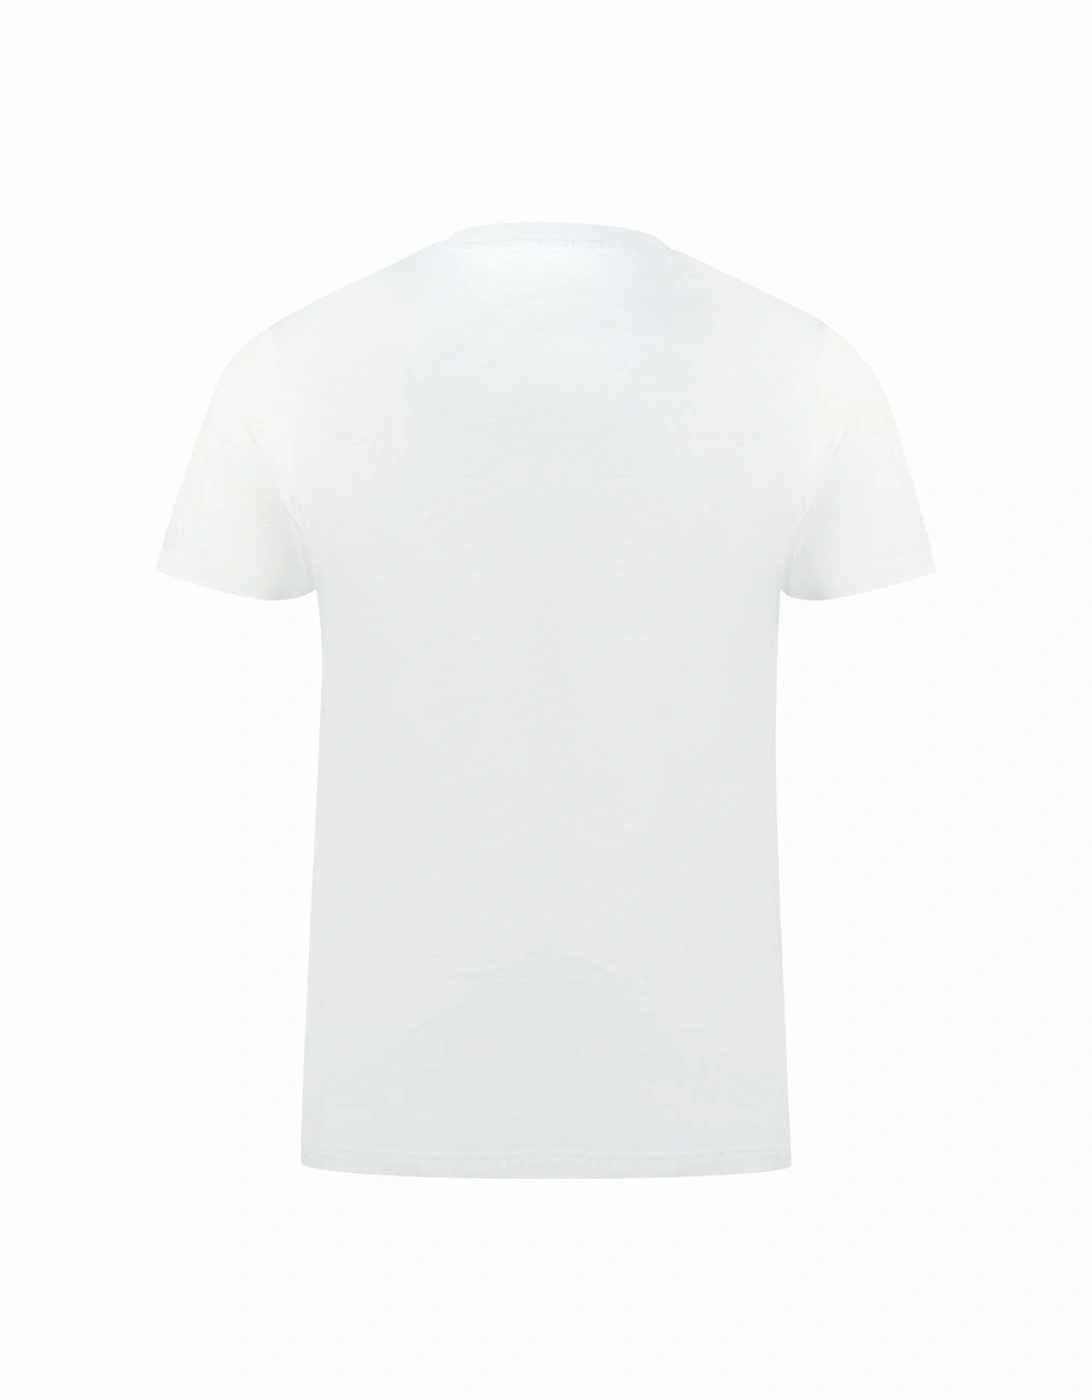 London Brand Logo White T-Shirt